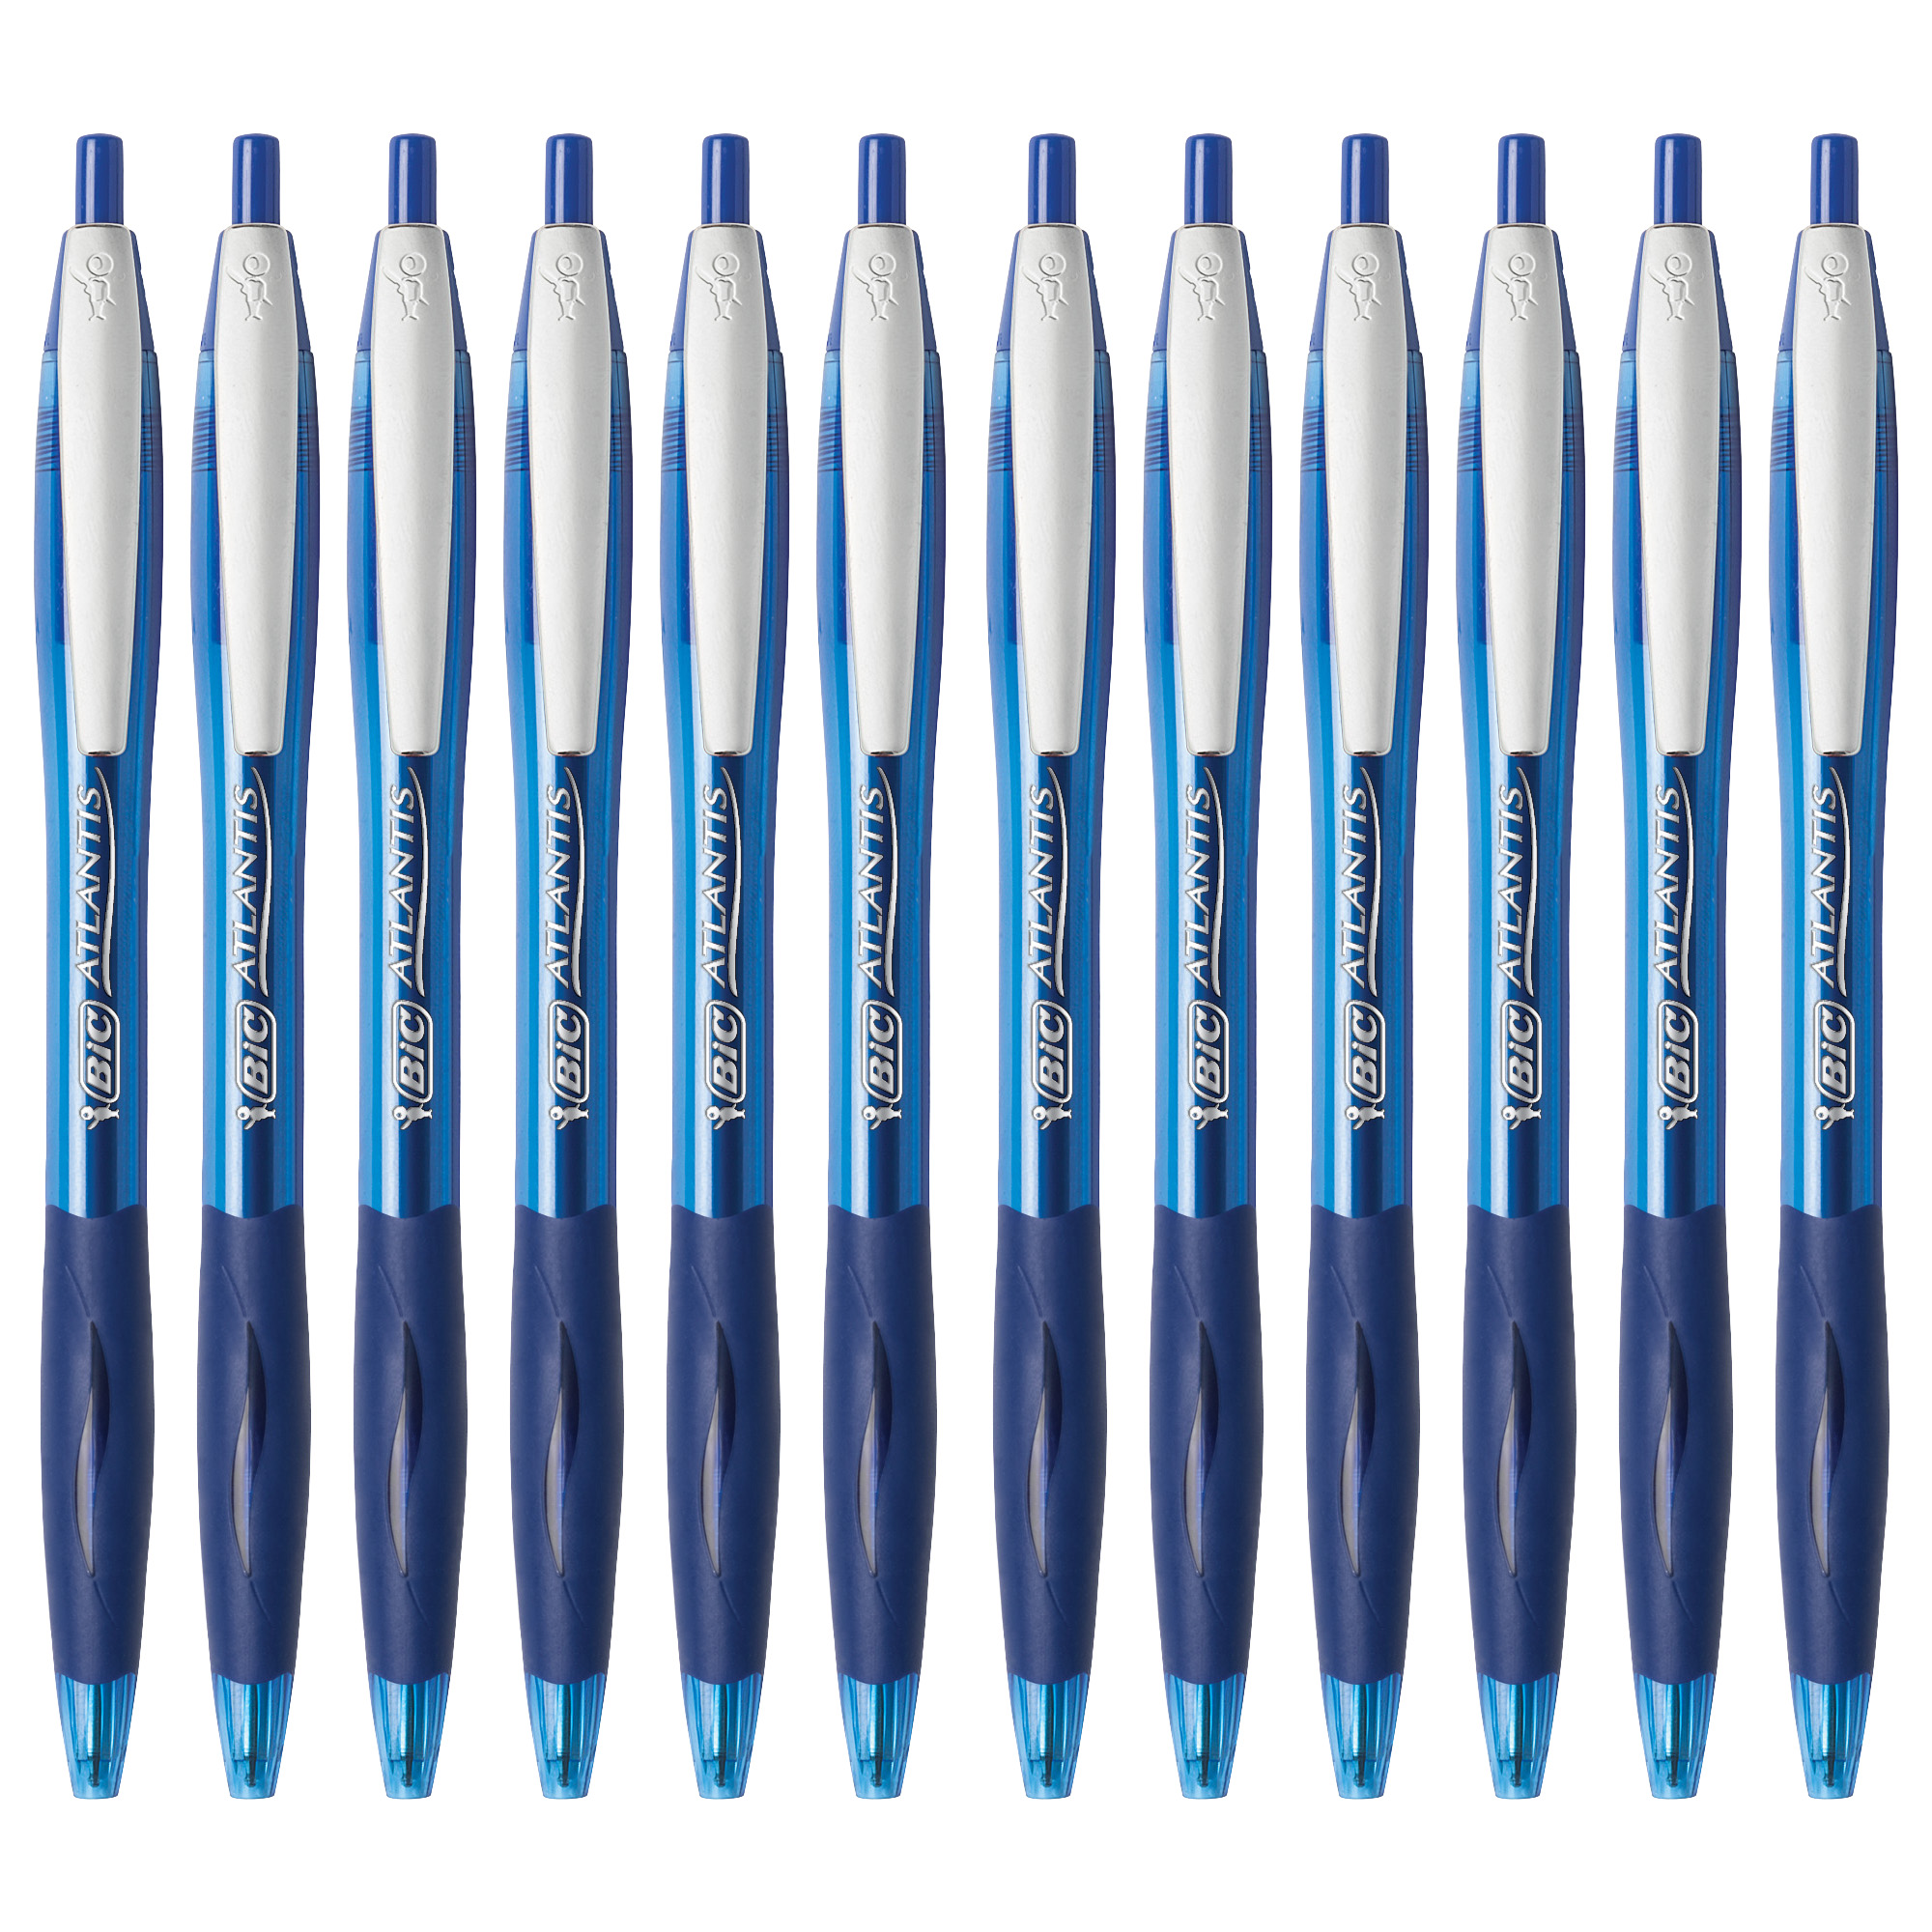 BIC Soft Feel Retractable Ball Pen, Medium Point (1.0 mm), Blue, 12-Count